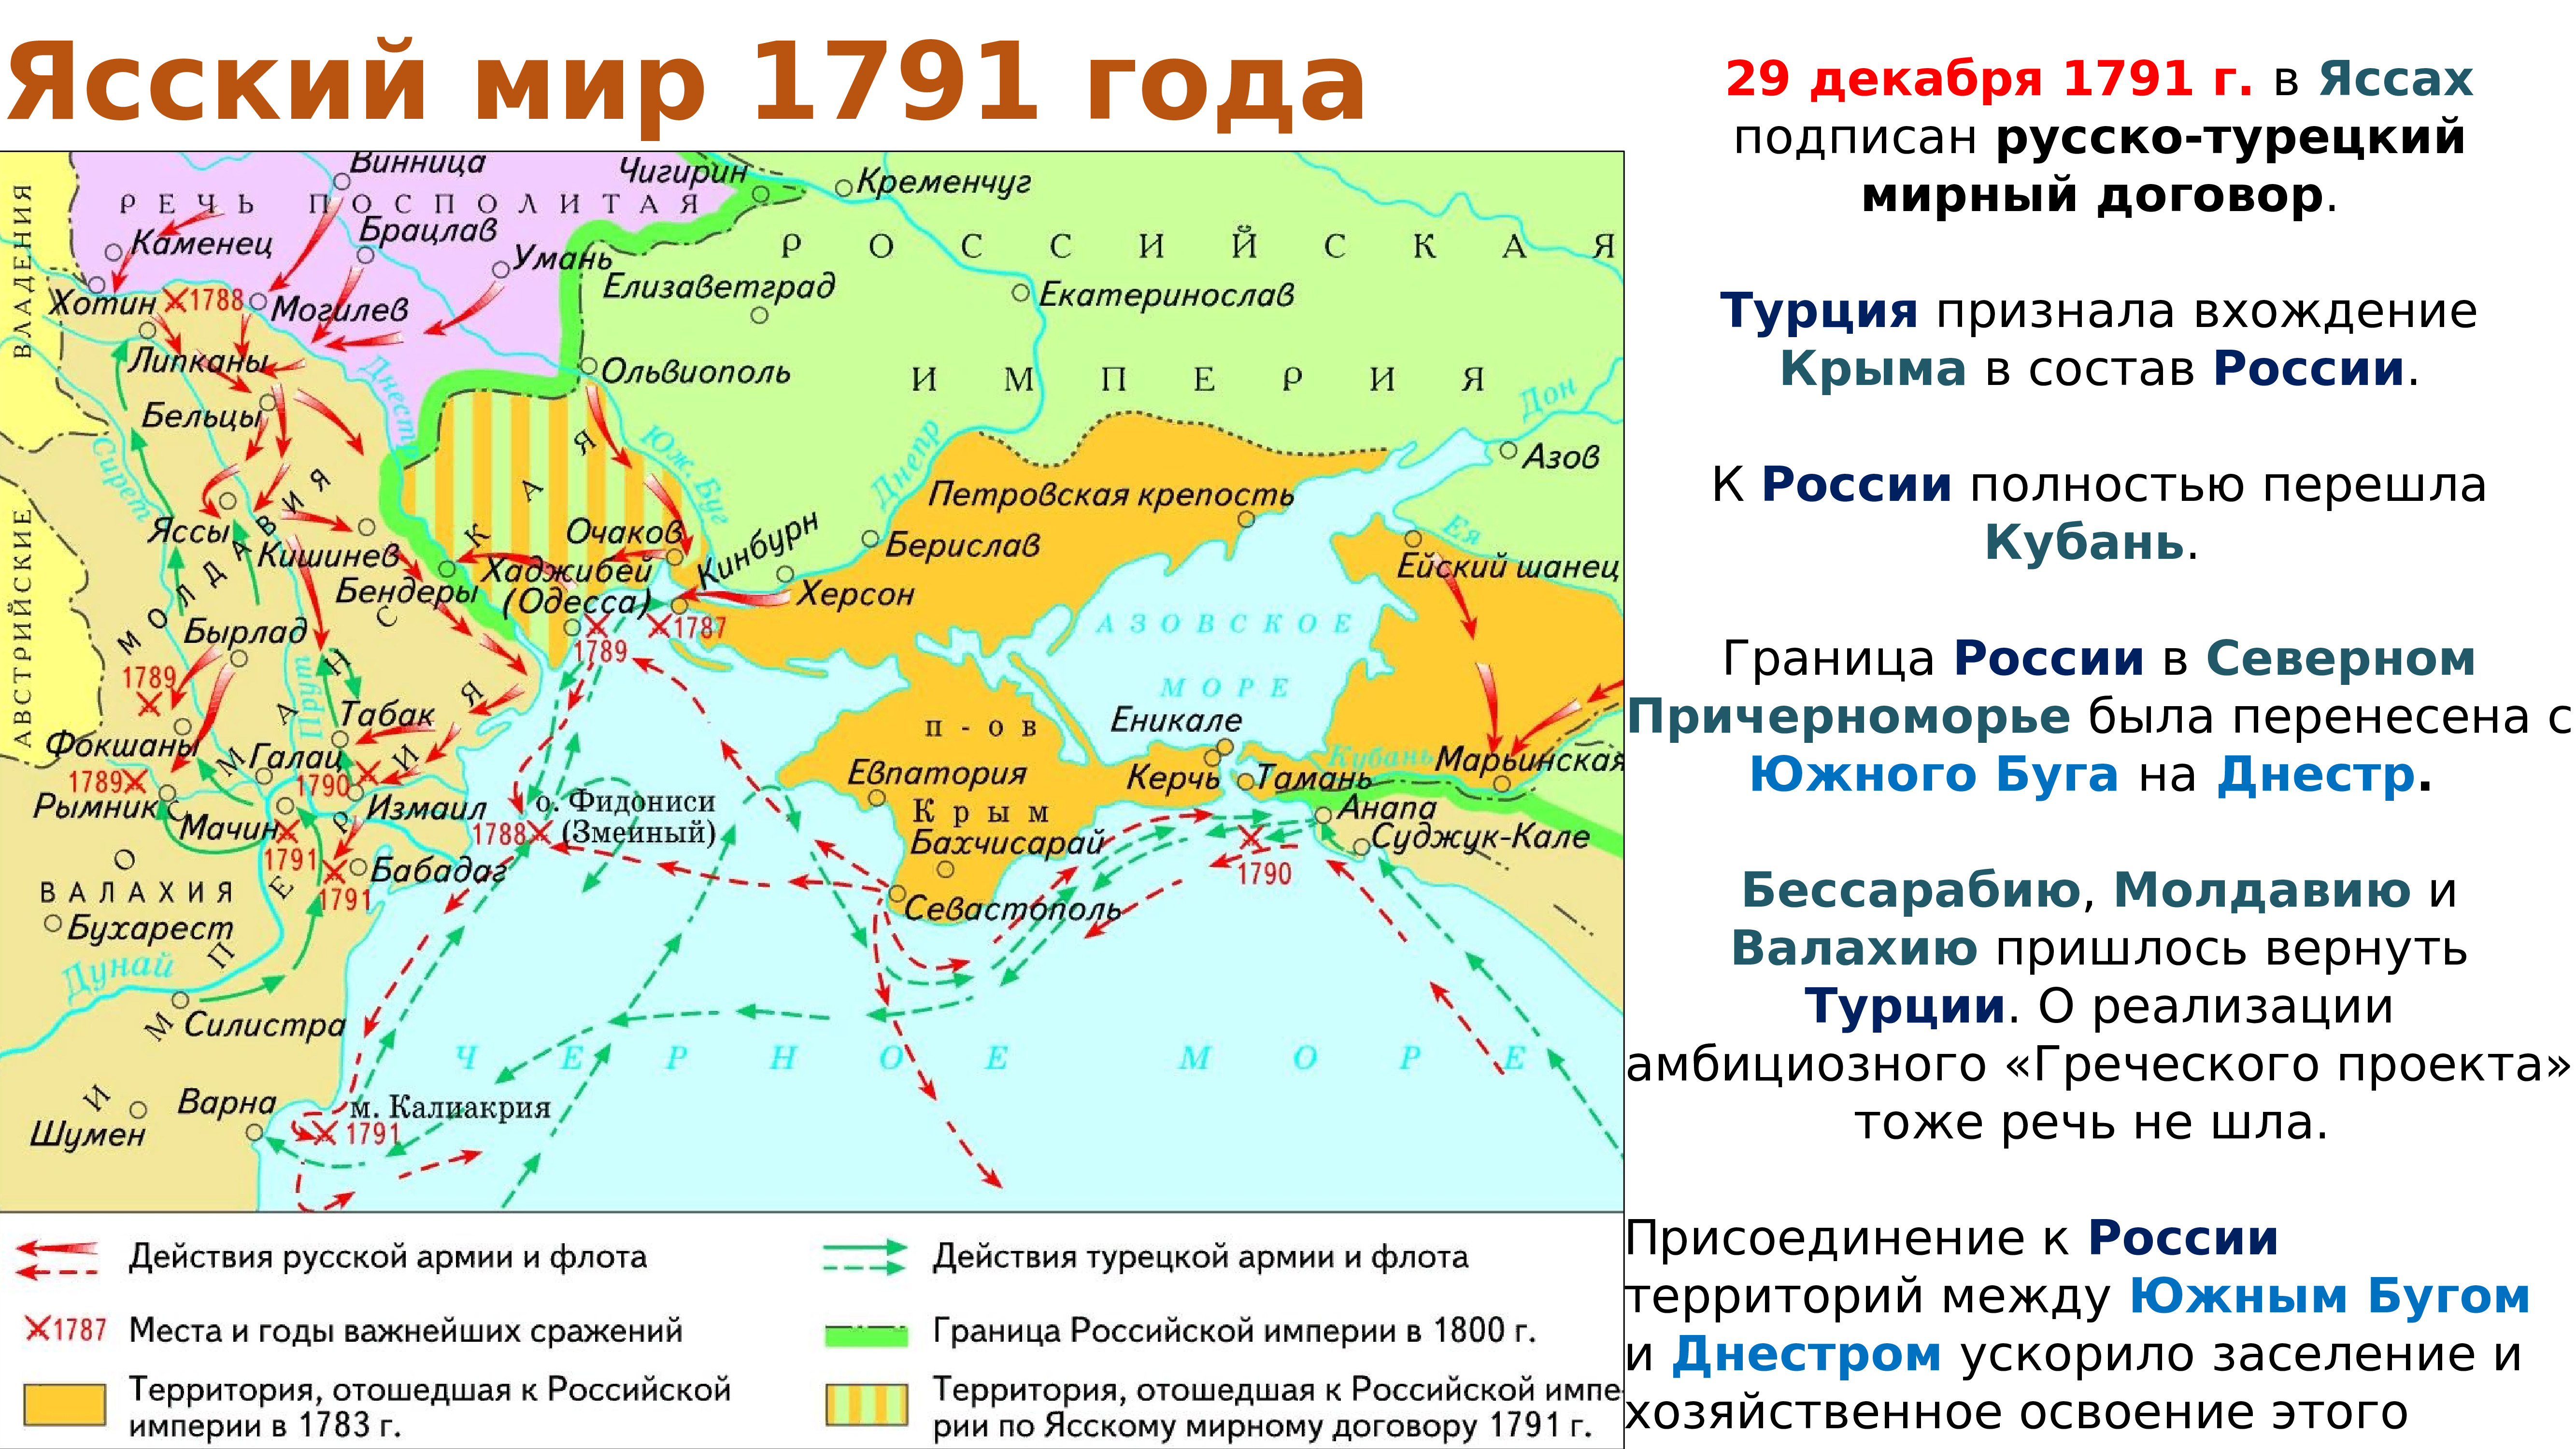 Участники 1 русско турецкой войны. Карта русско-турецкой войны 1787-1791 г.